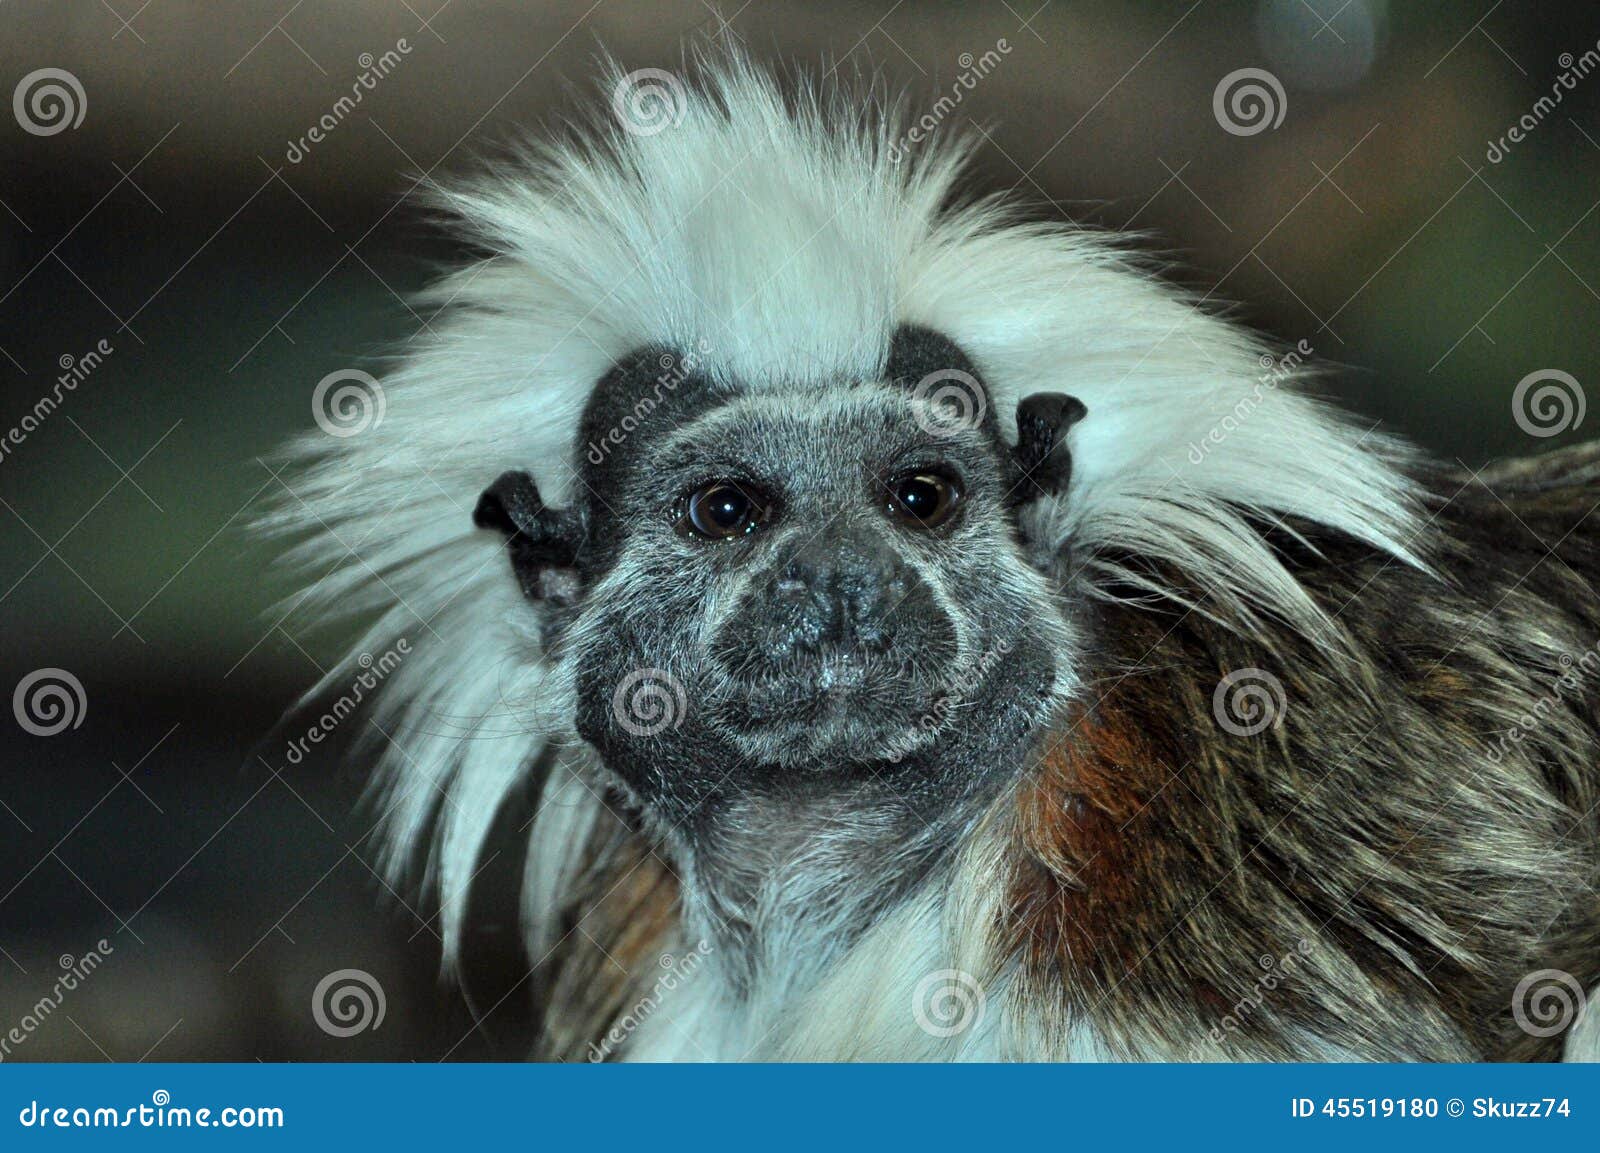 Gremlin stock photo. Image of crazy, monkey, outdoor - 45519180